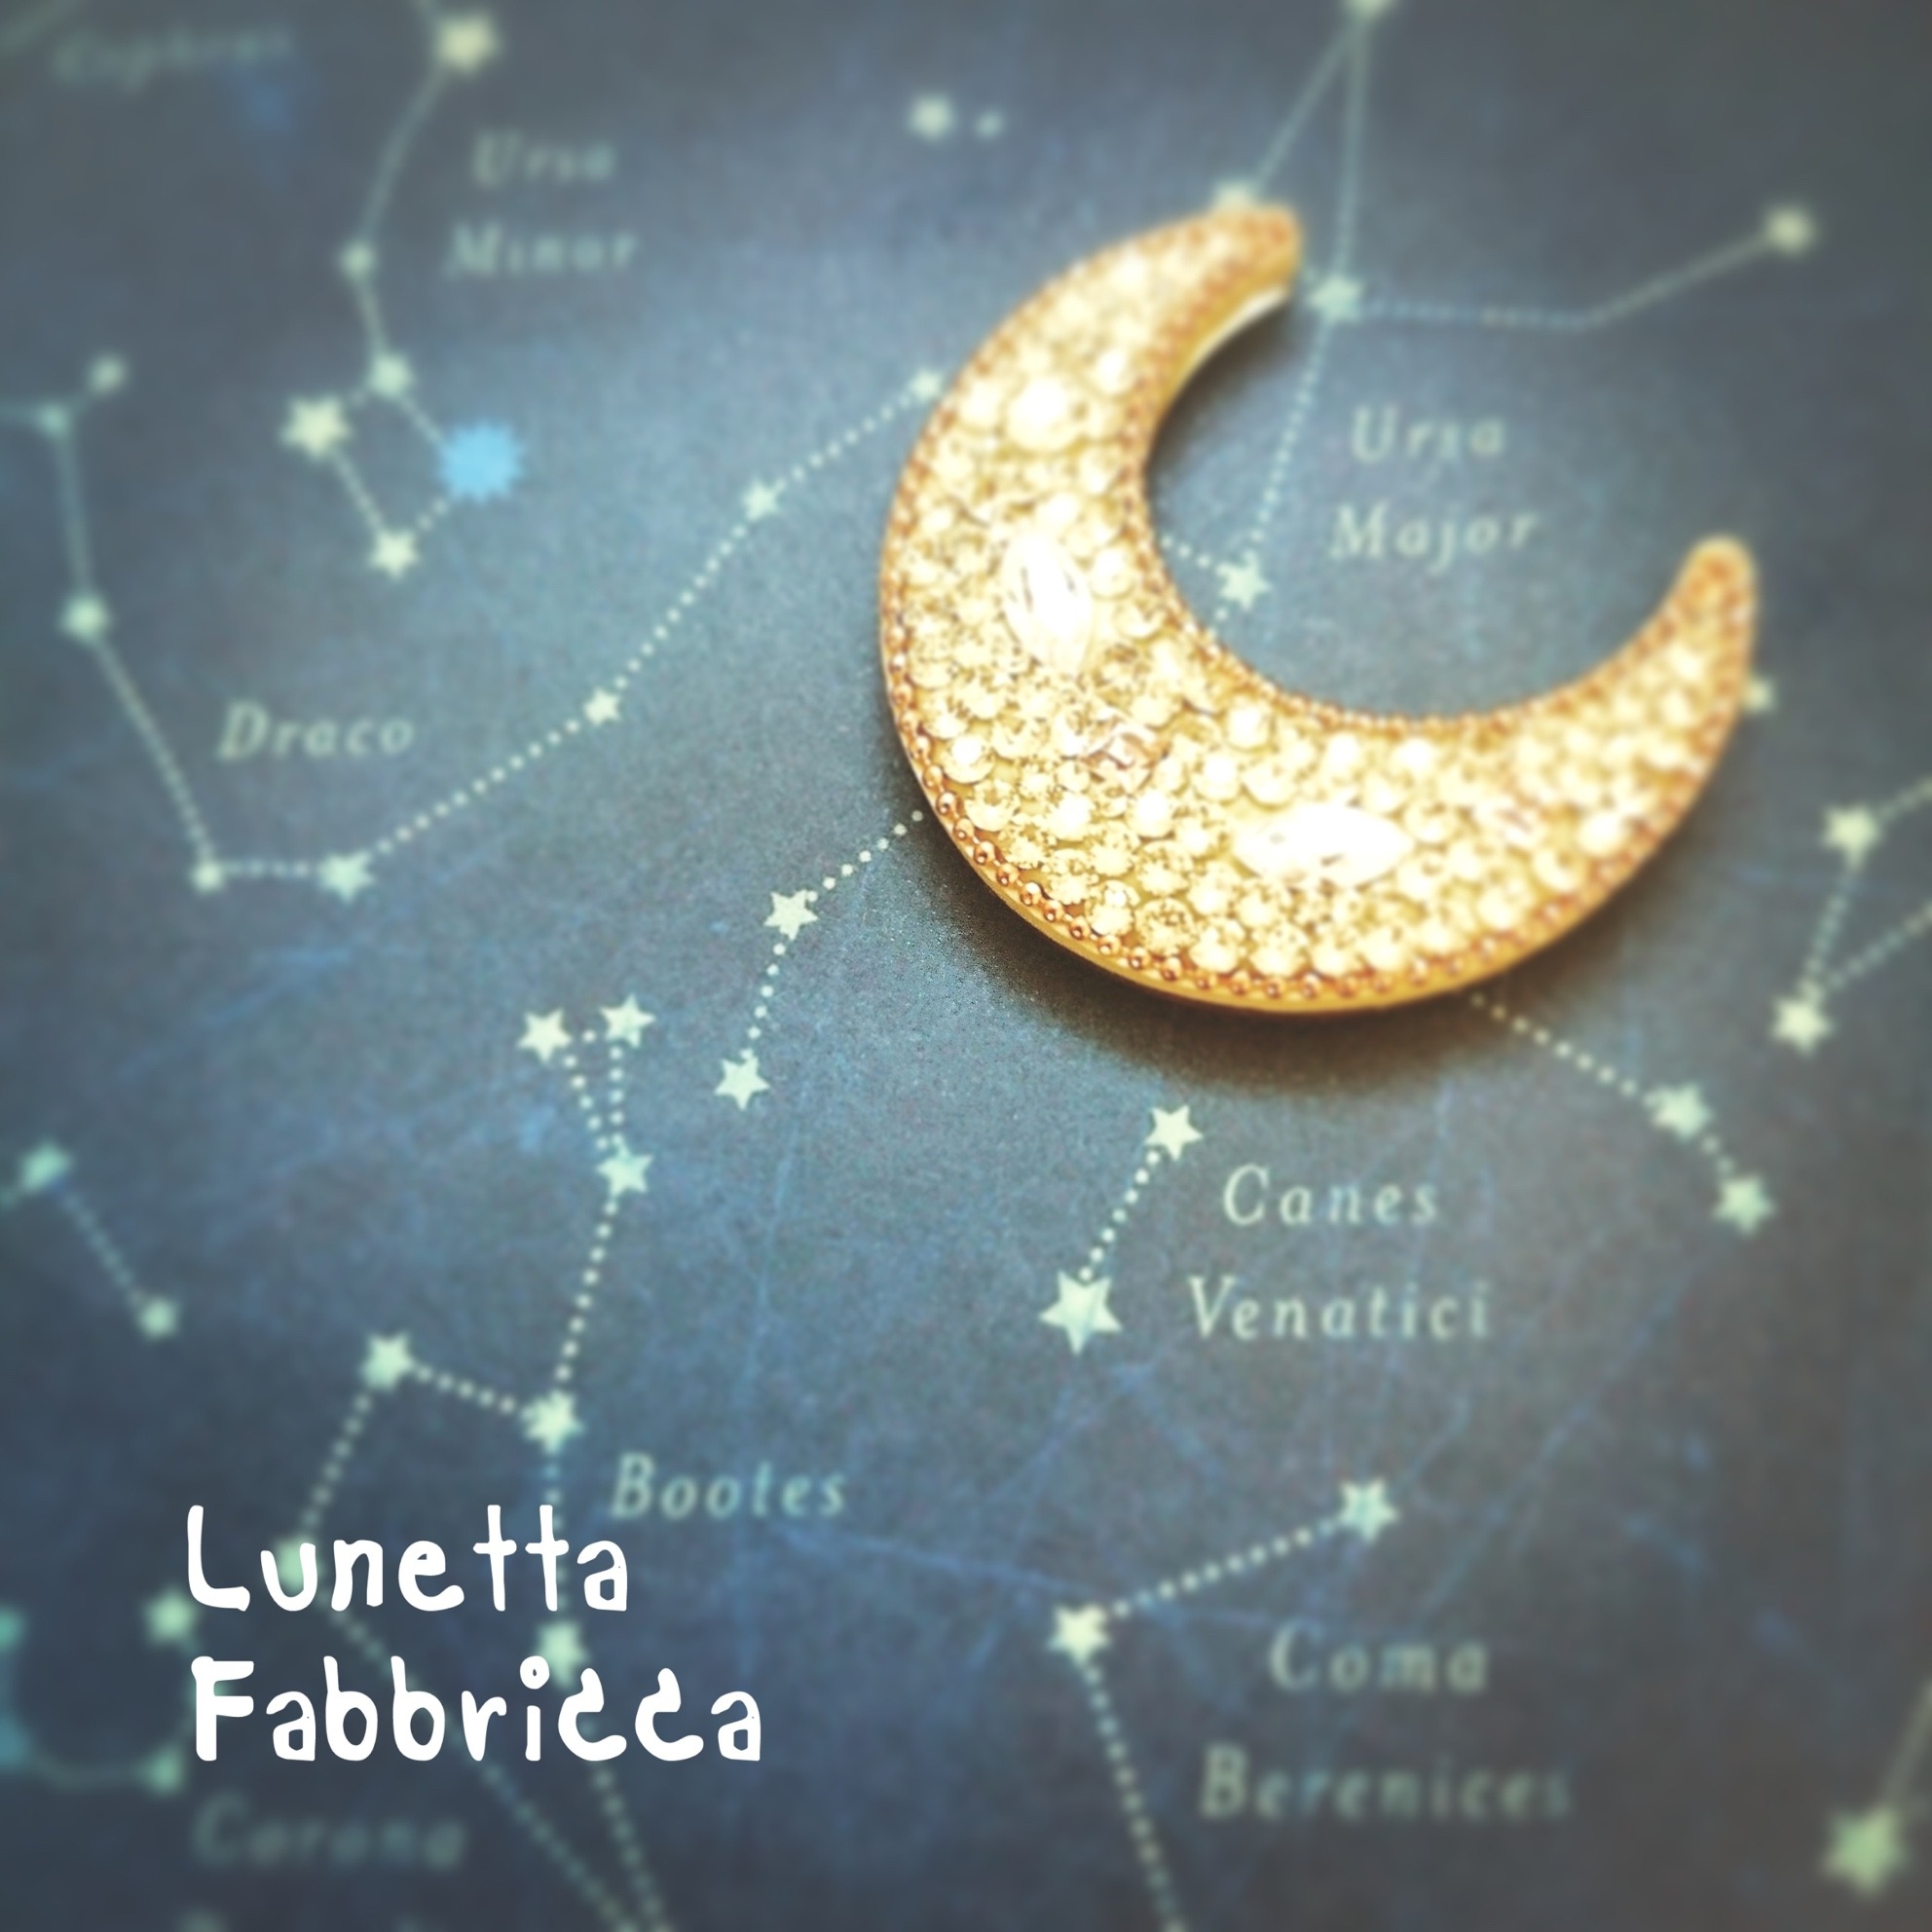 Lunetta Fabbricca